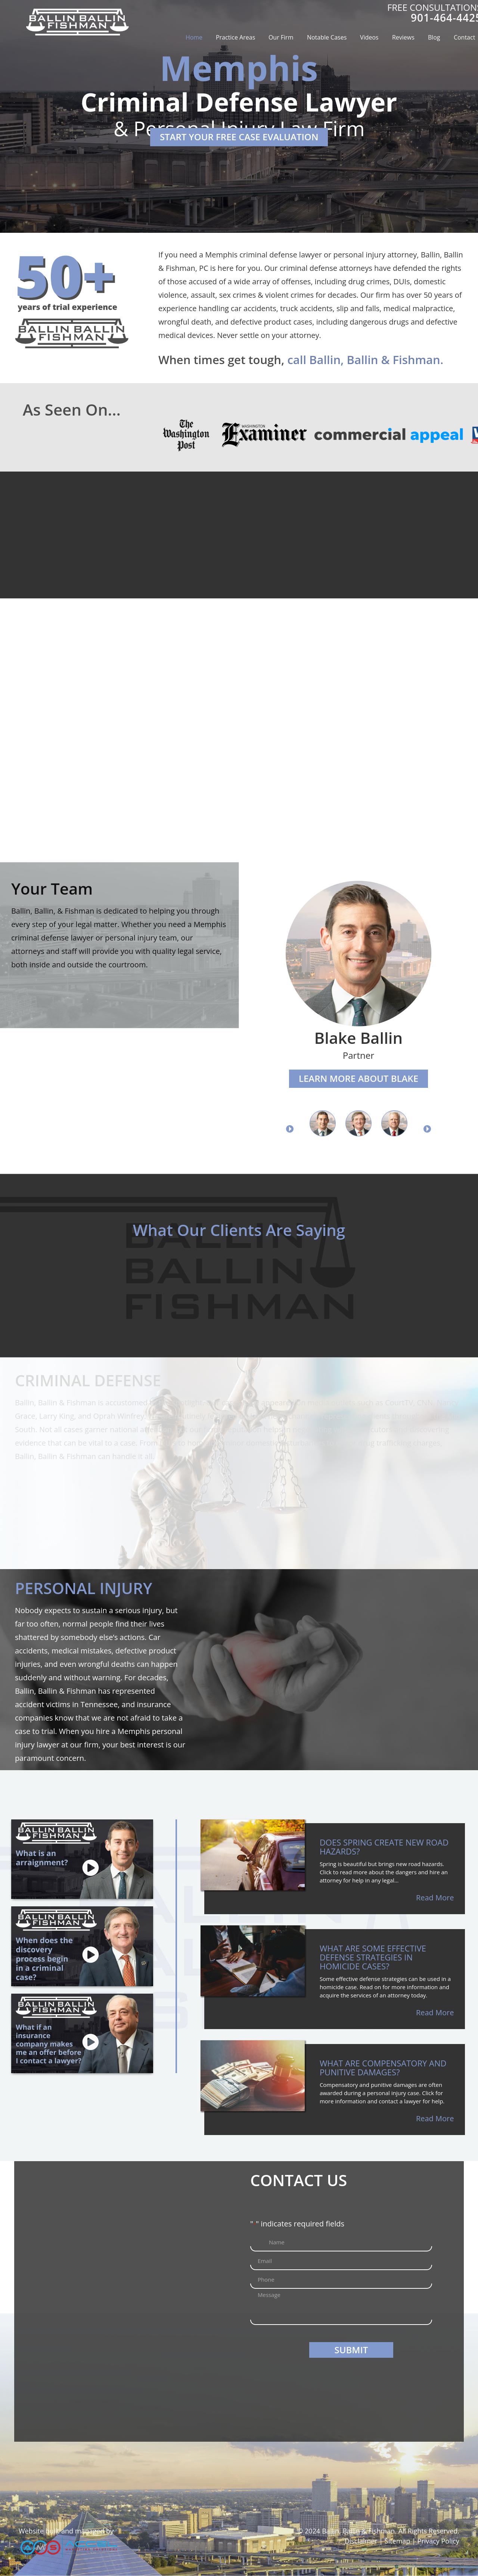 Ballin, Ballin & Fishman, PC - Memphis TN Lawyers